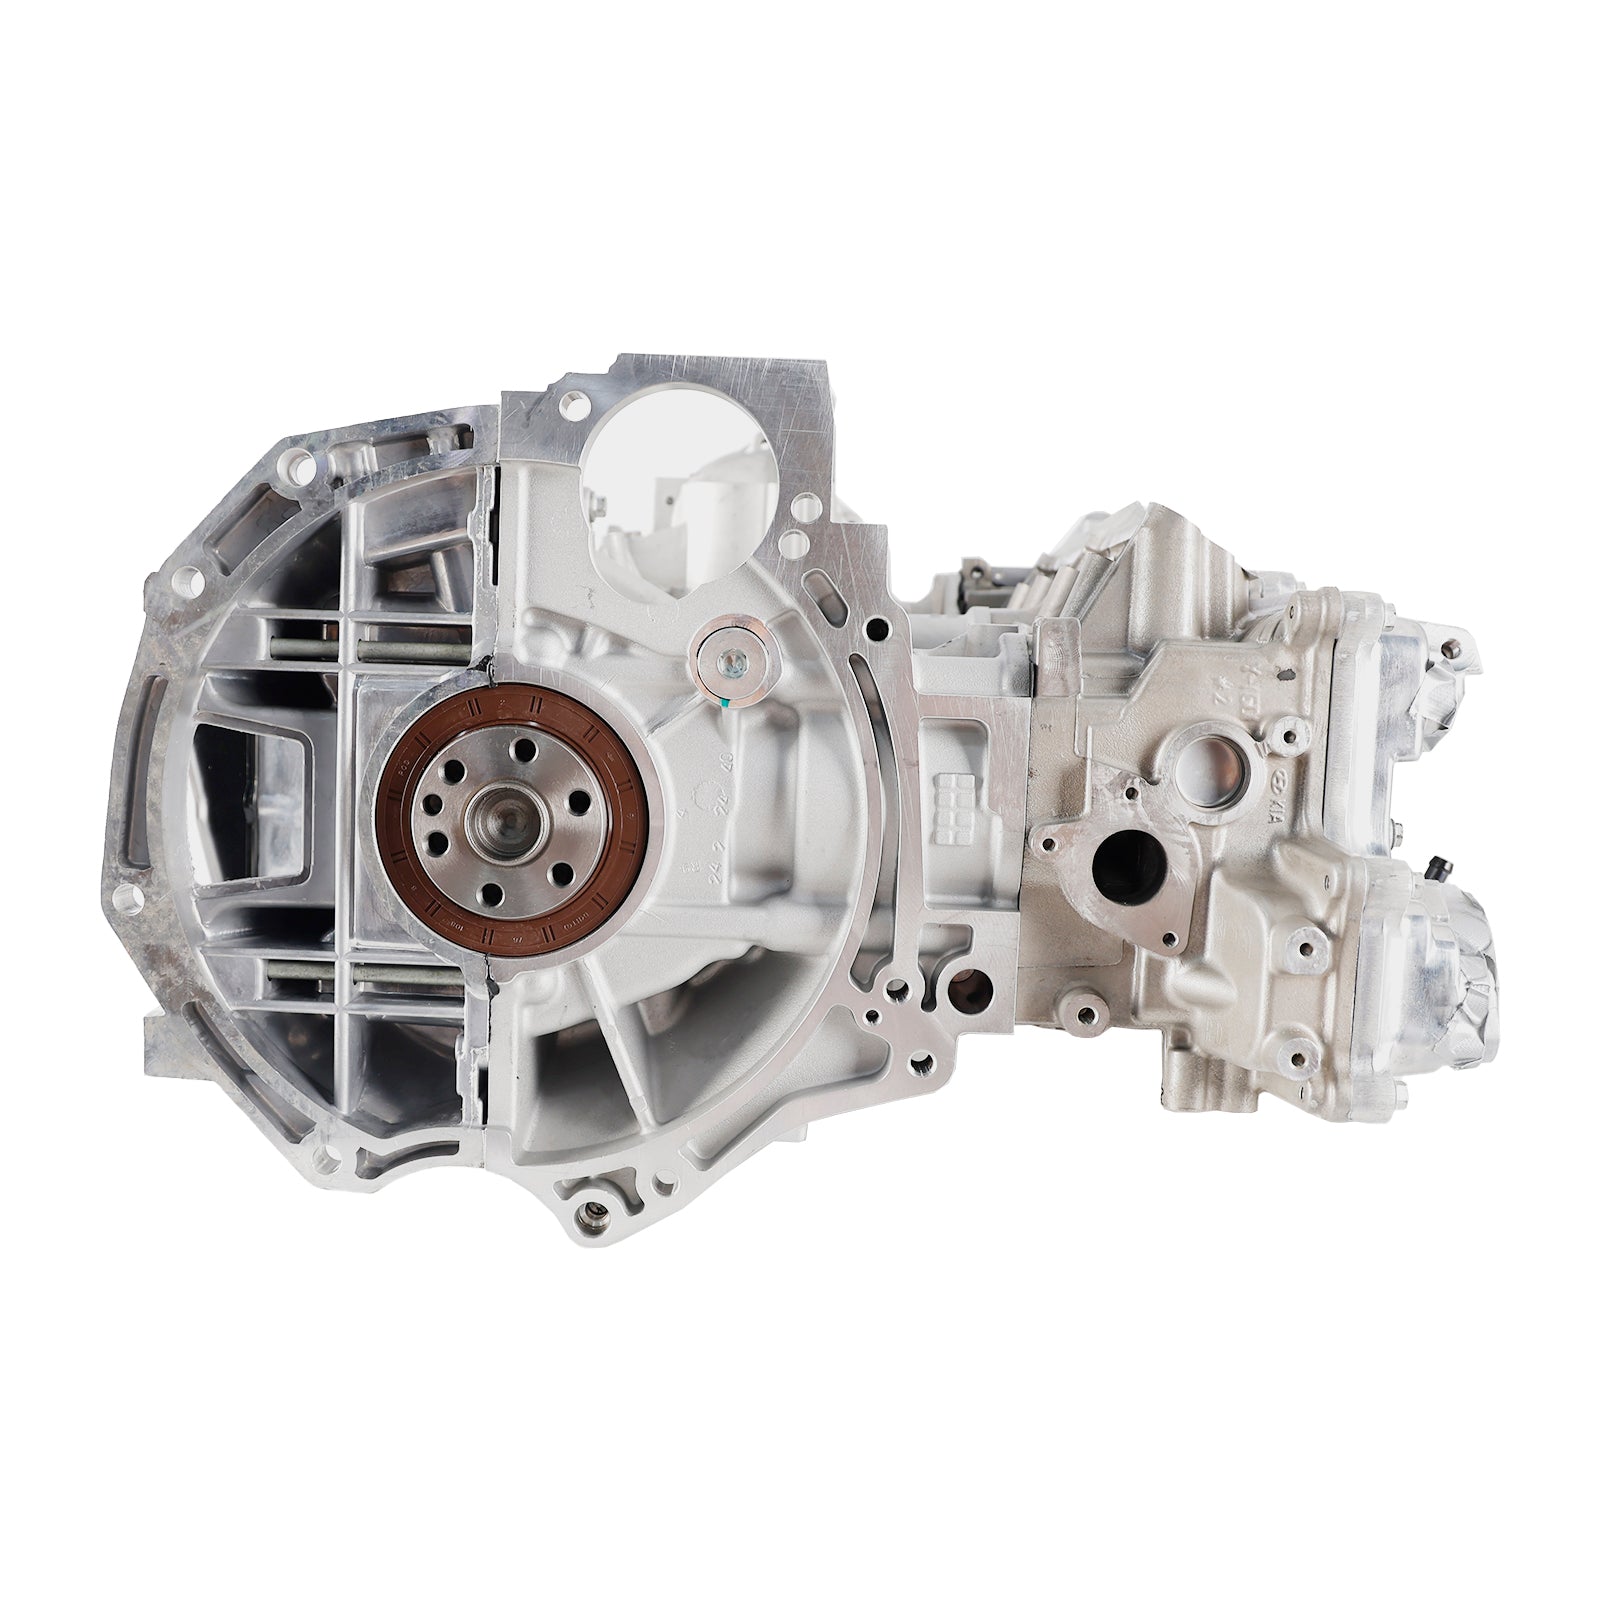 G4FJ New Engine Assembly 1.6T For Hyundai Tucson Sonata Elantra Kia Optima Soul